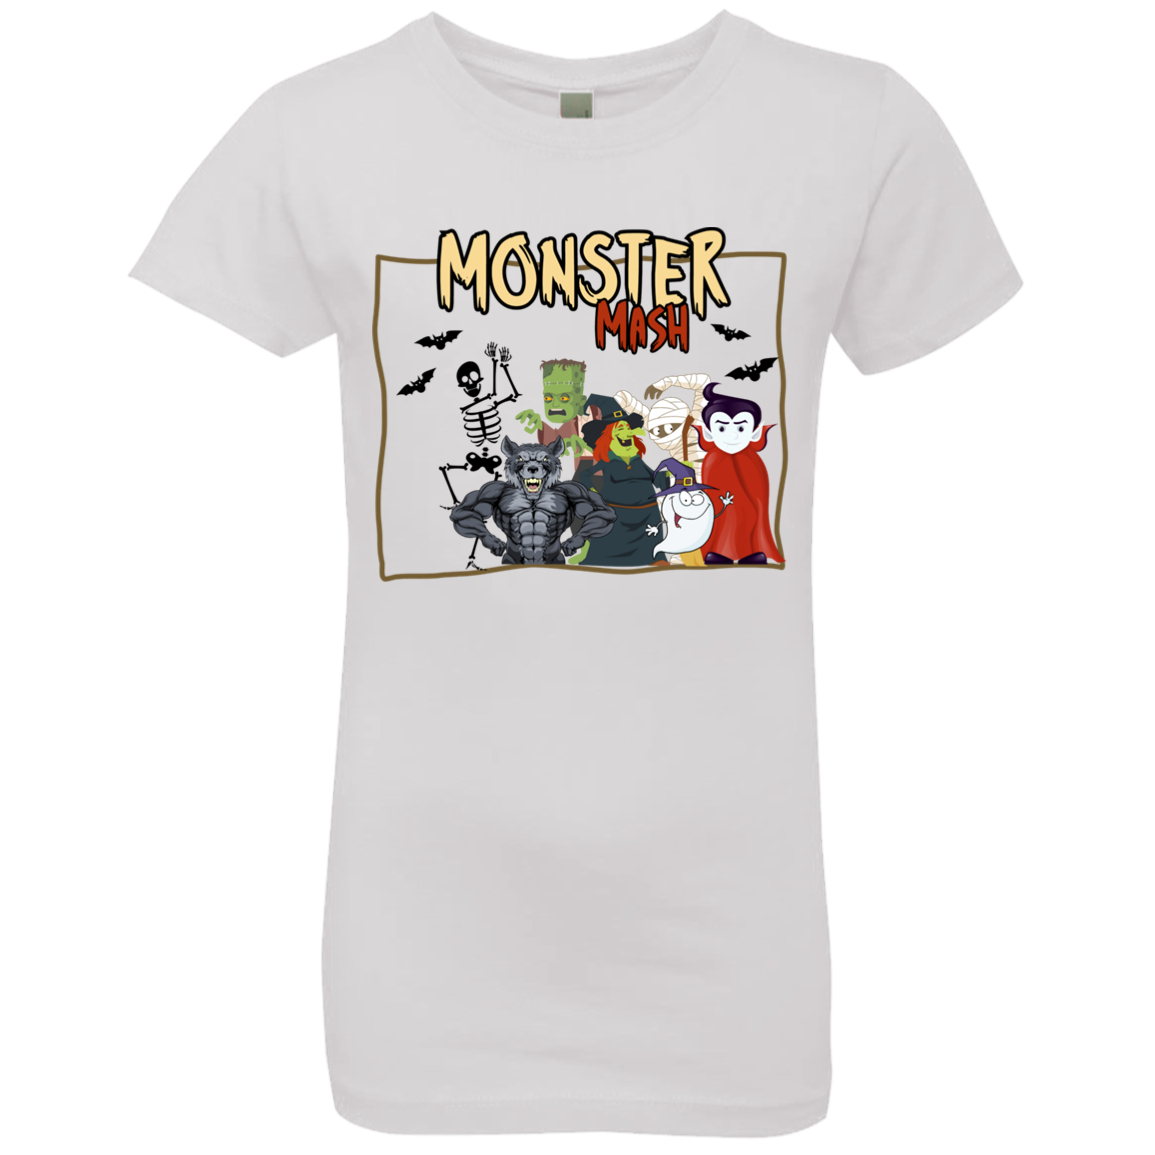 Monster Mash - Girls', Teen, Youth T-Shirt